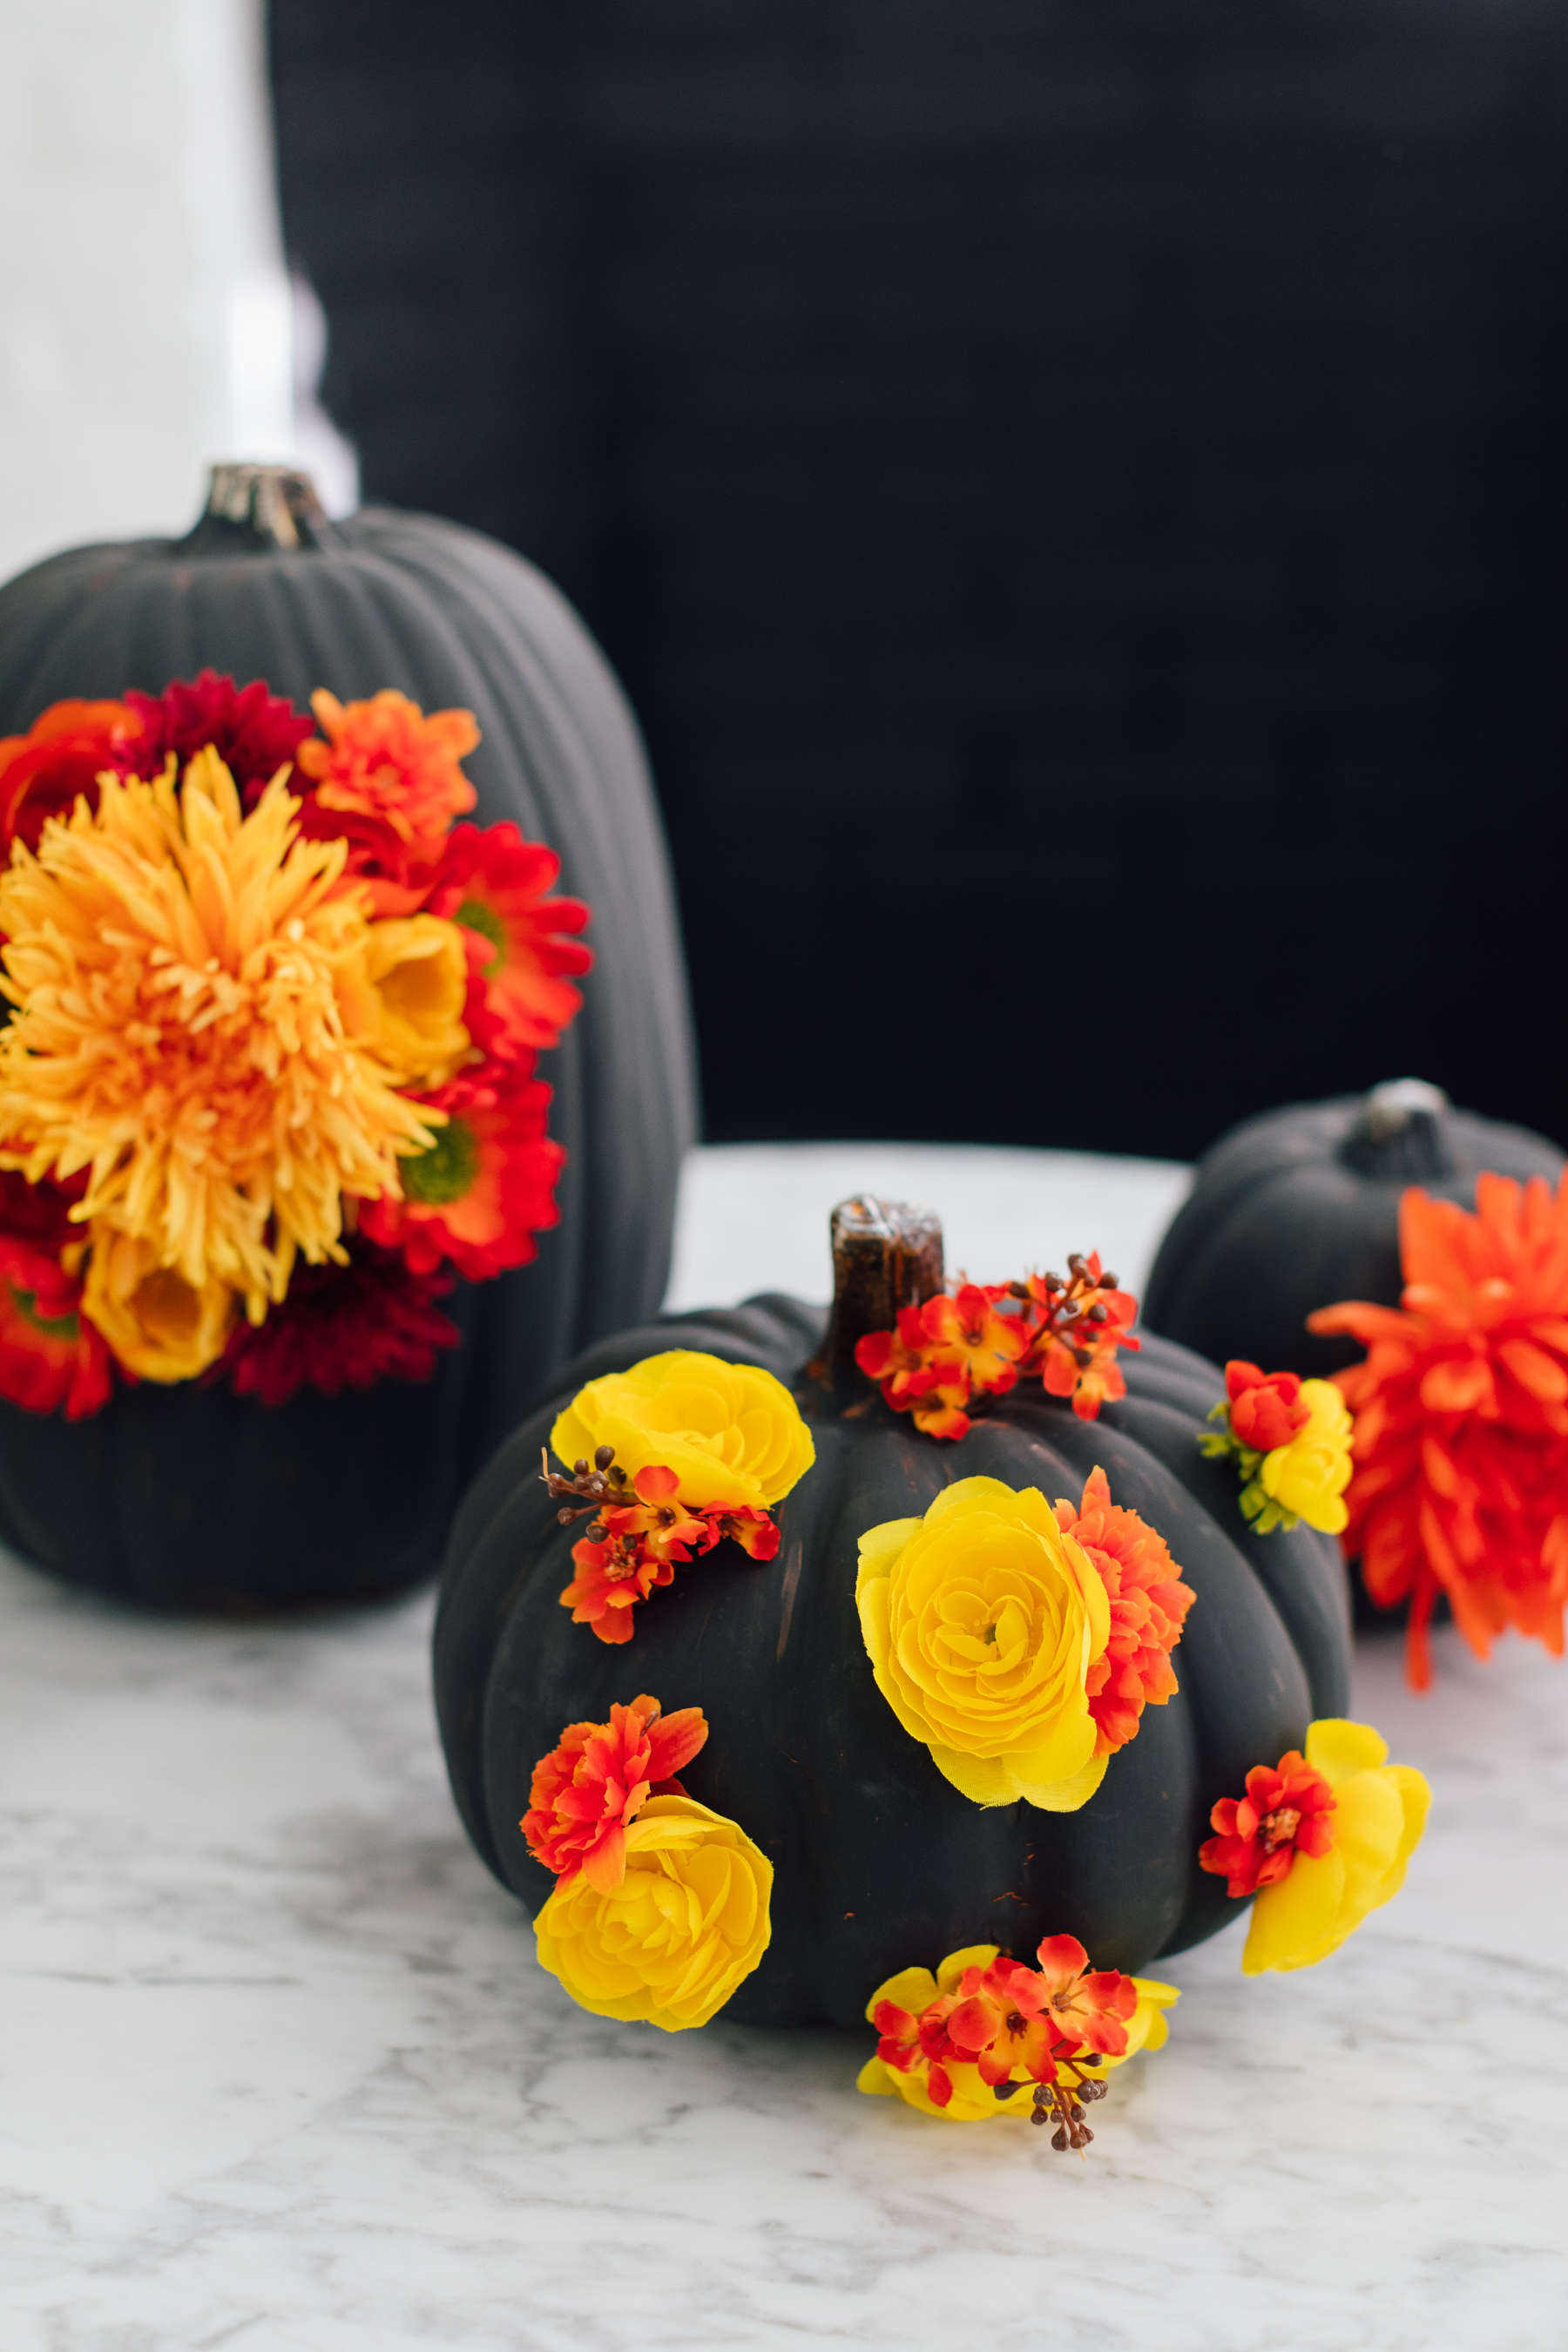 Eva Amurri Martino shares an easy fall DIY for faux floral pumpkins